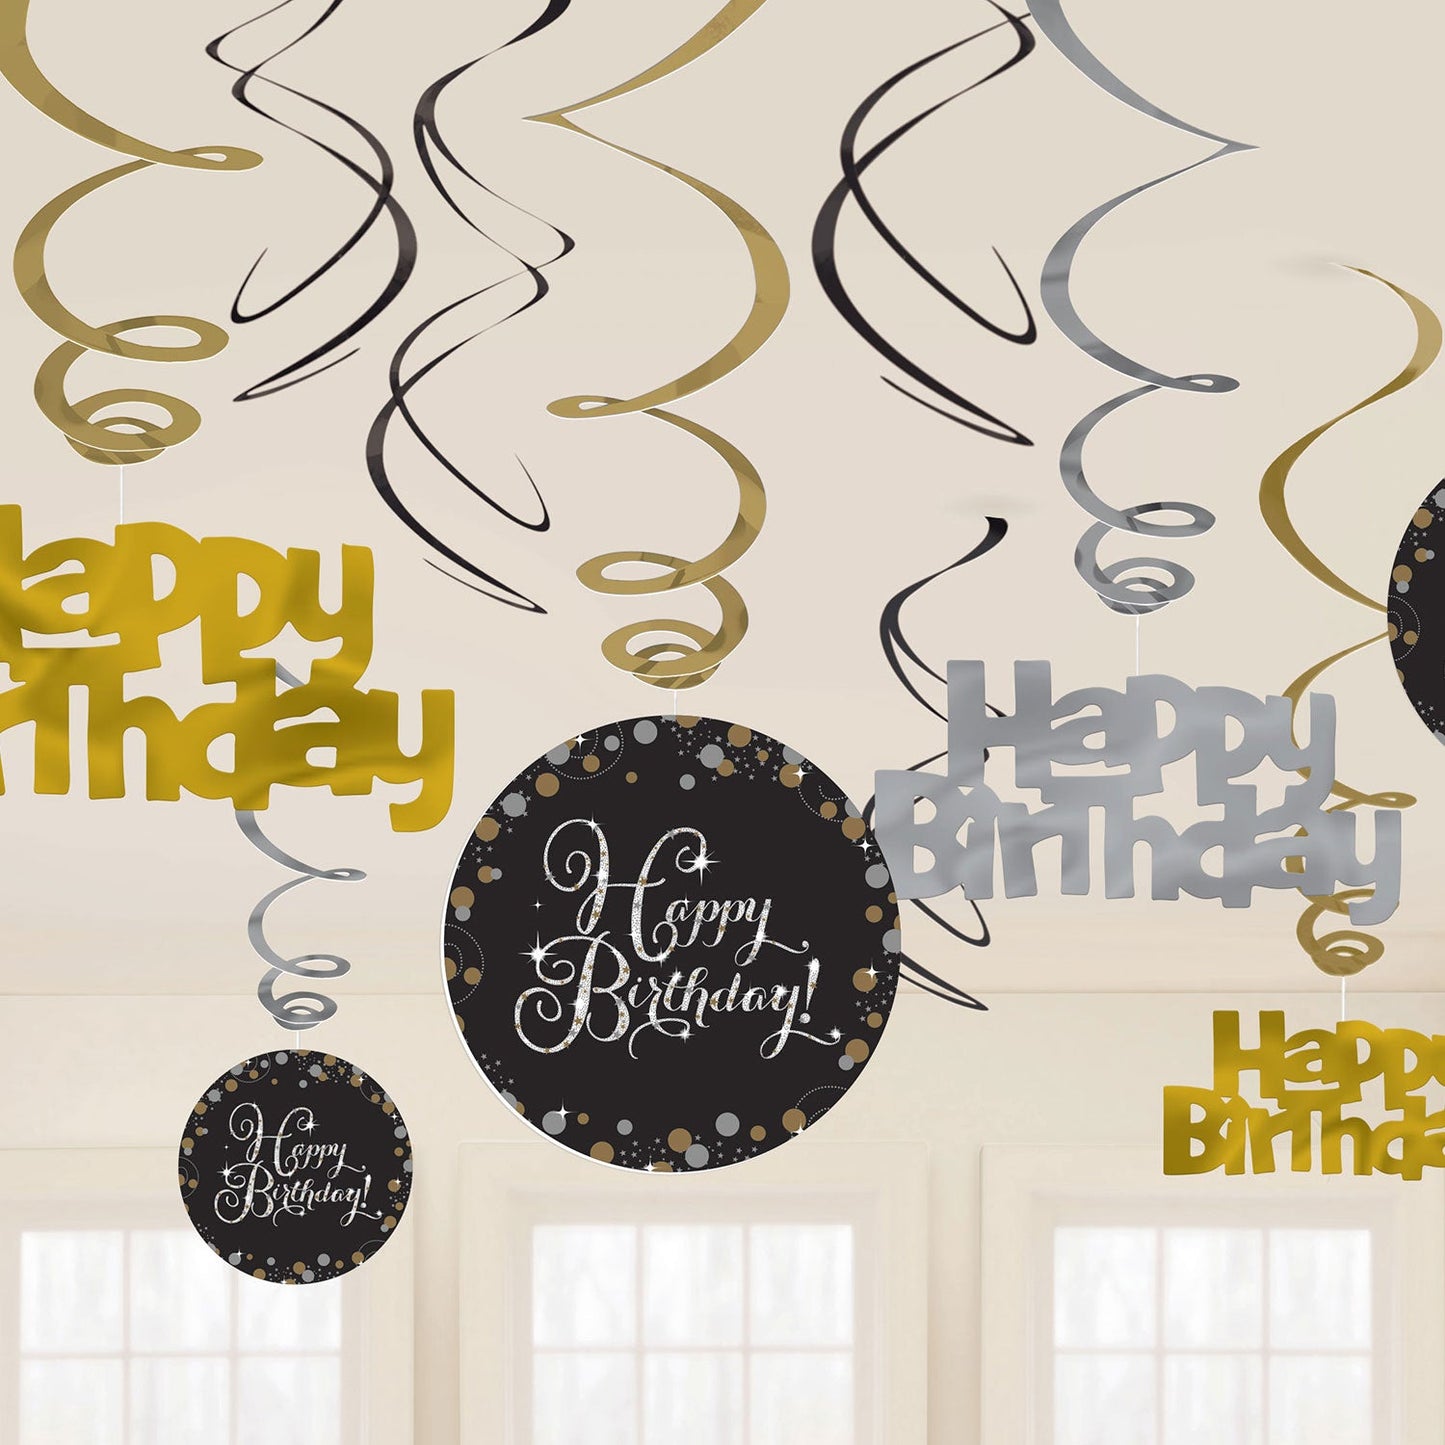 Gold Celebration Birthday Swirl Decorations . Contains 6 Foil Swirls 45cm, 3 Swirls 60cm with Card Numbers, 3 Foil Swirls 60cm with Foil Numbers